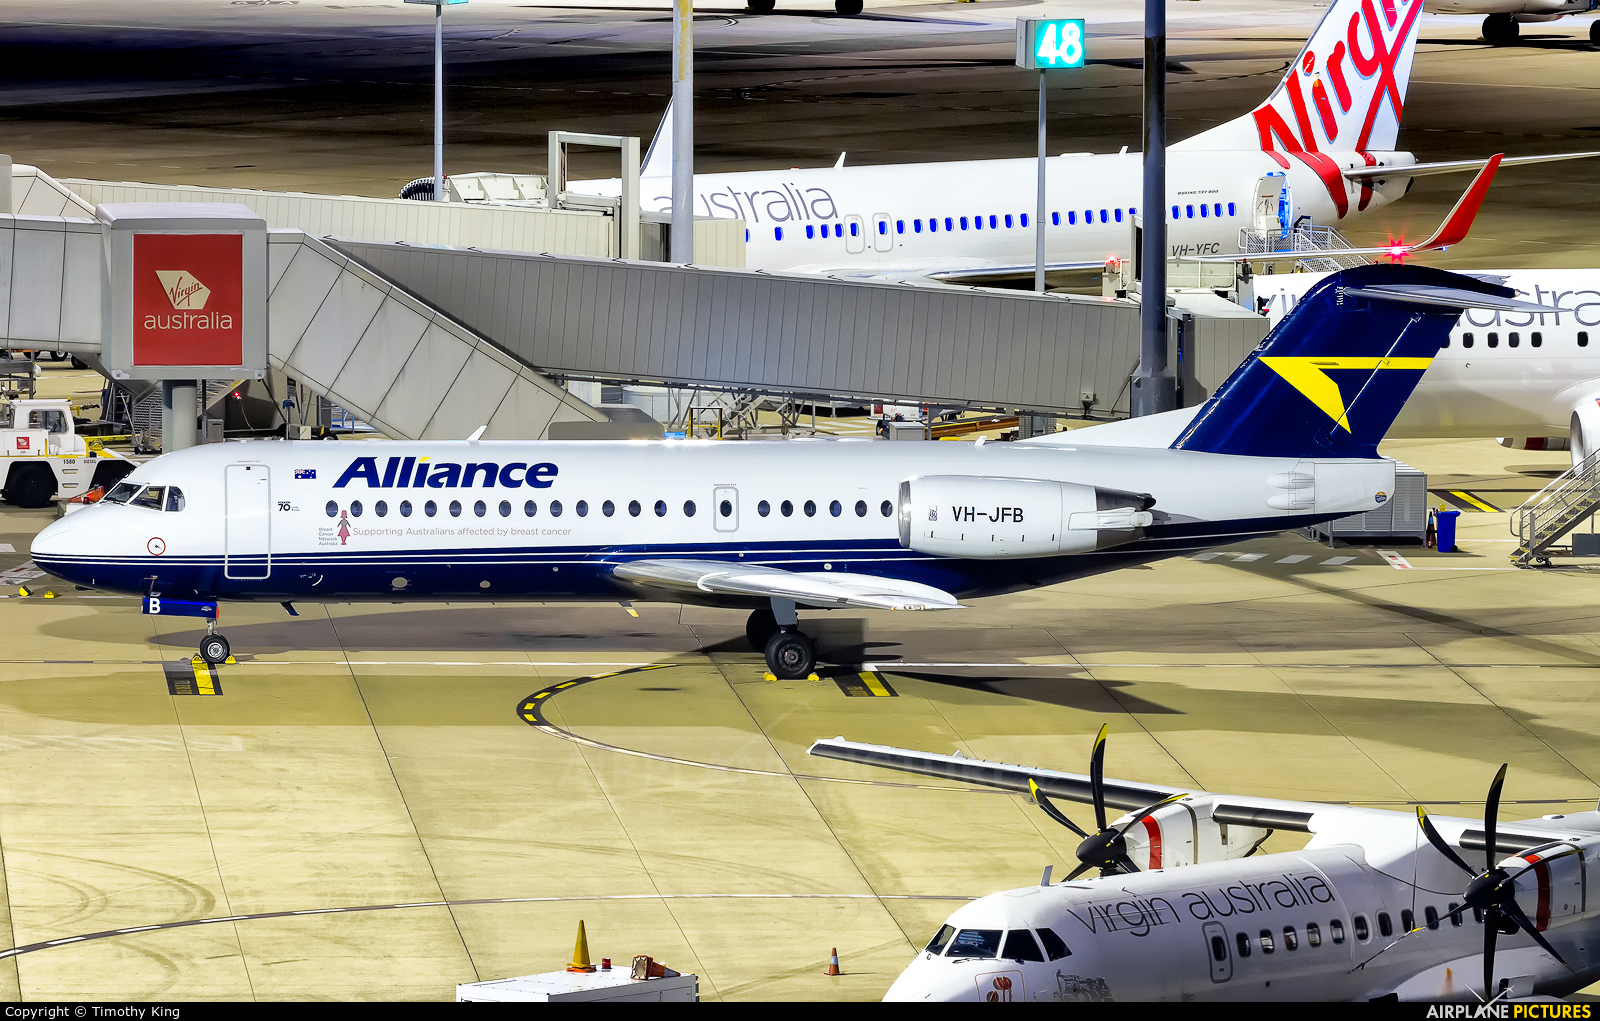 Alliance Airlines VH-JFB aircraft at Brisbane, QLD